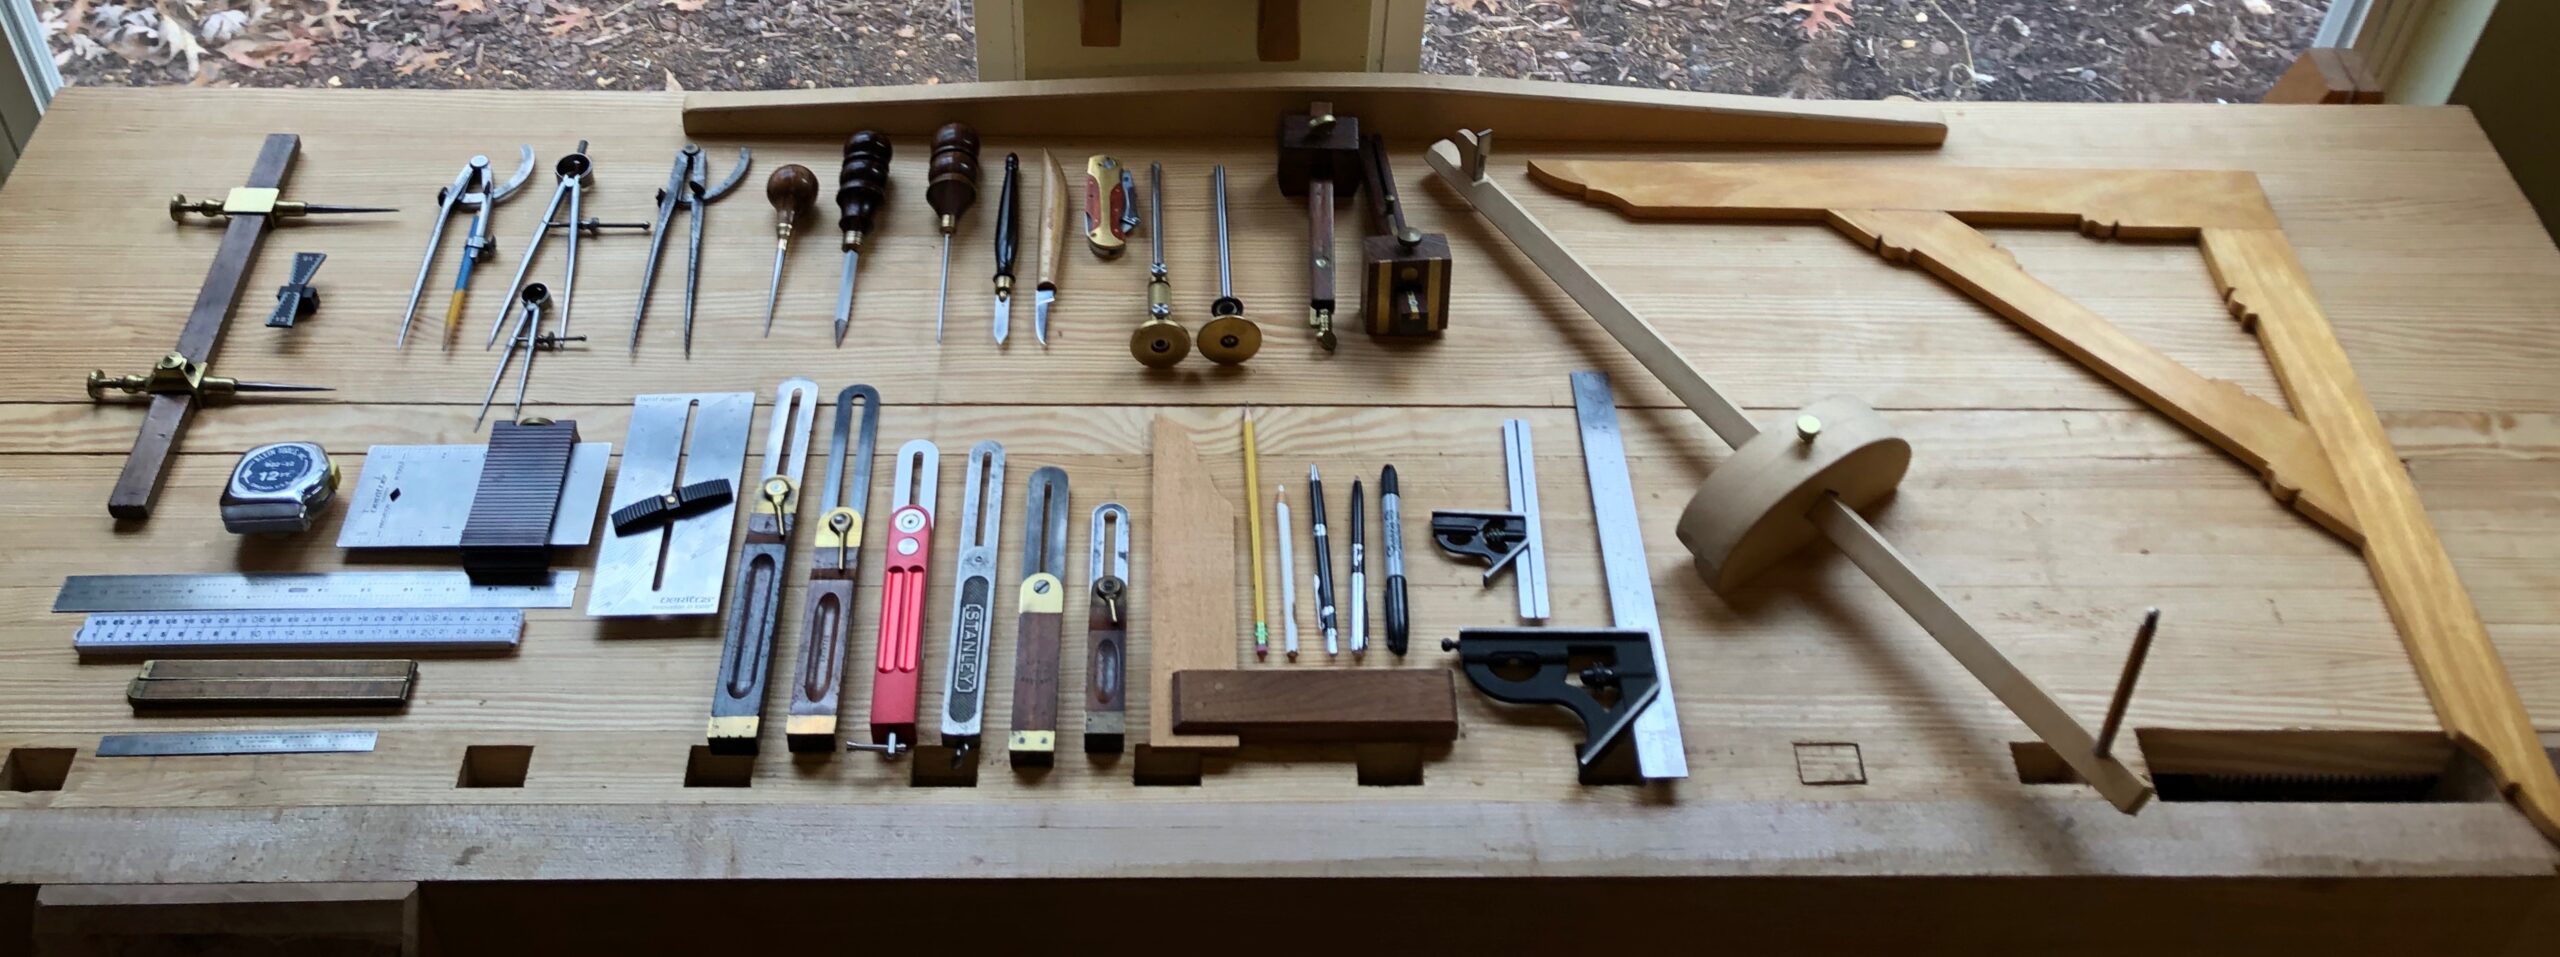 Homemade Layout Tool - HomemadeTools.net  Beams, Metal working tools,  Fabrication tools